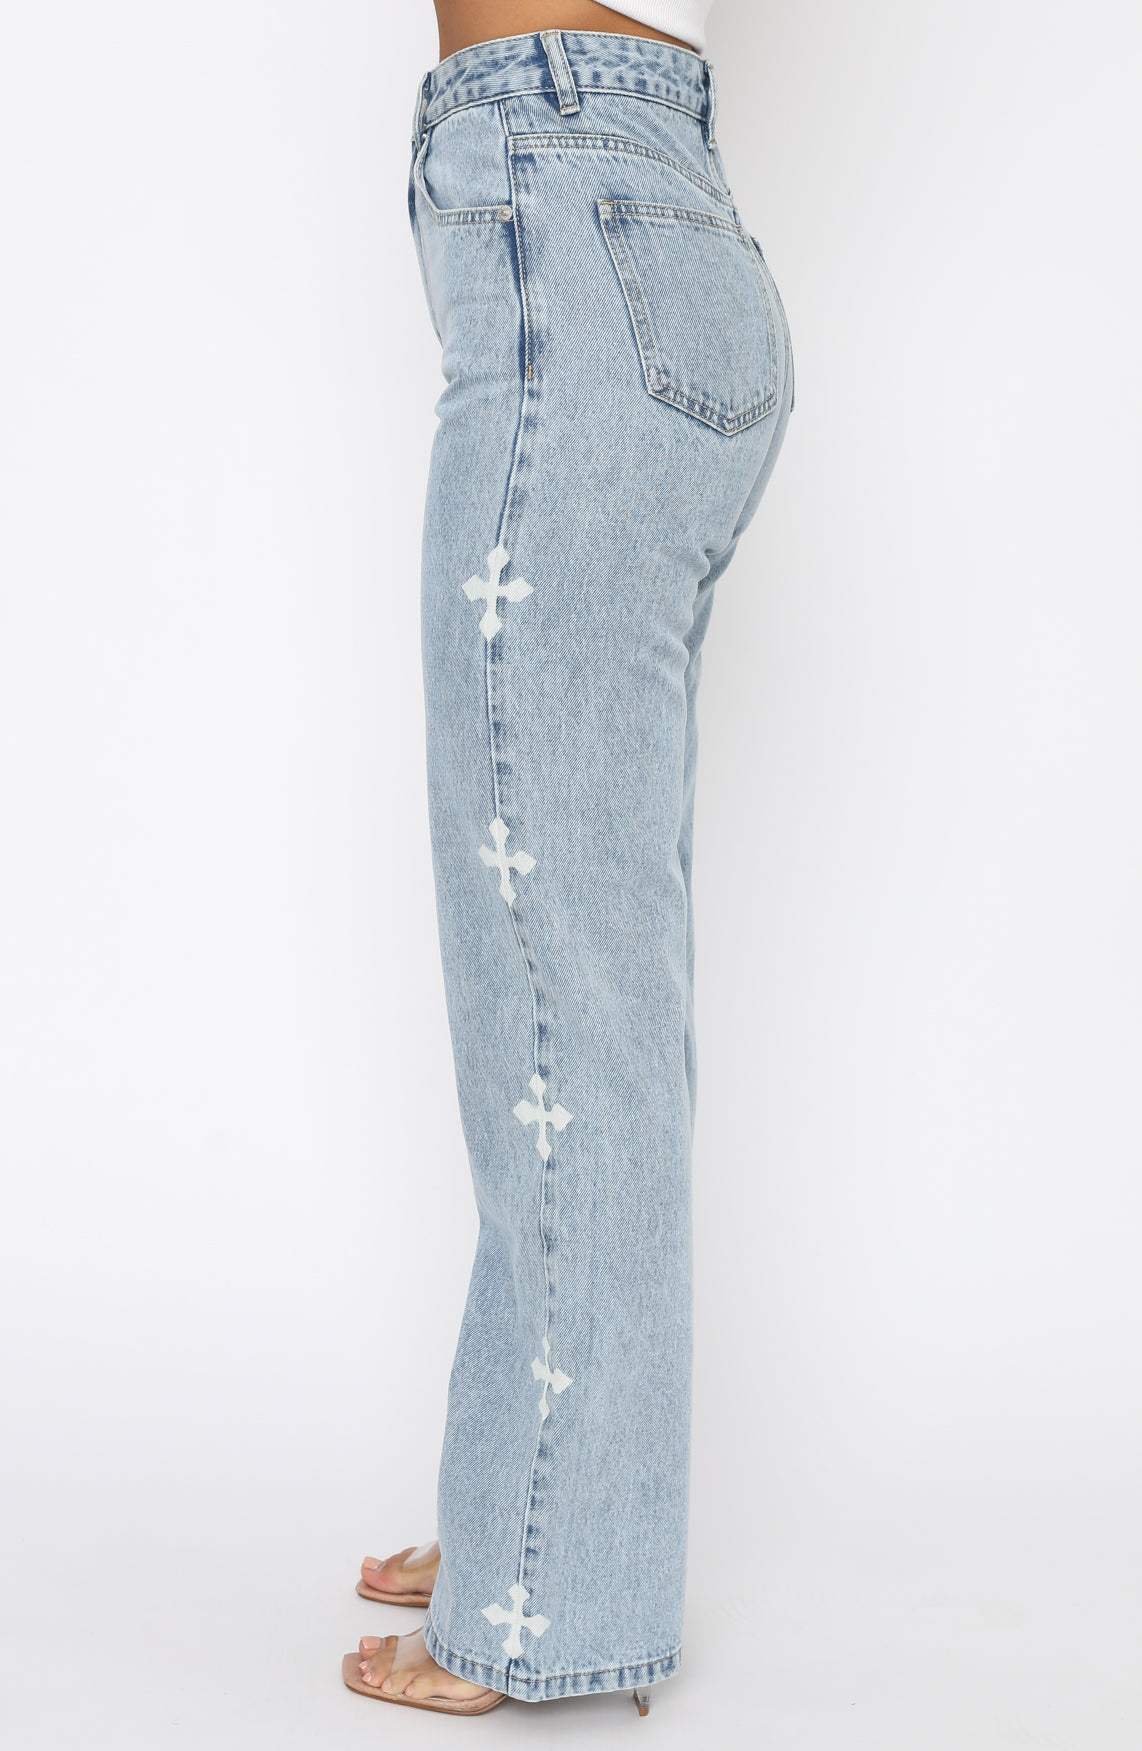 Butlifting Jeans!!, Jeans Blanco un color Infaltable en tu closet 💯  Colombiano❤❤❤ 👏Store 361- Boynton Beach Mall 801 N. Congress Ave. Boynton  beach - Fl 33426 Pedidos (, By JeansCol Boutique